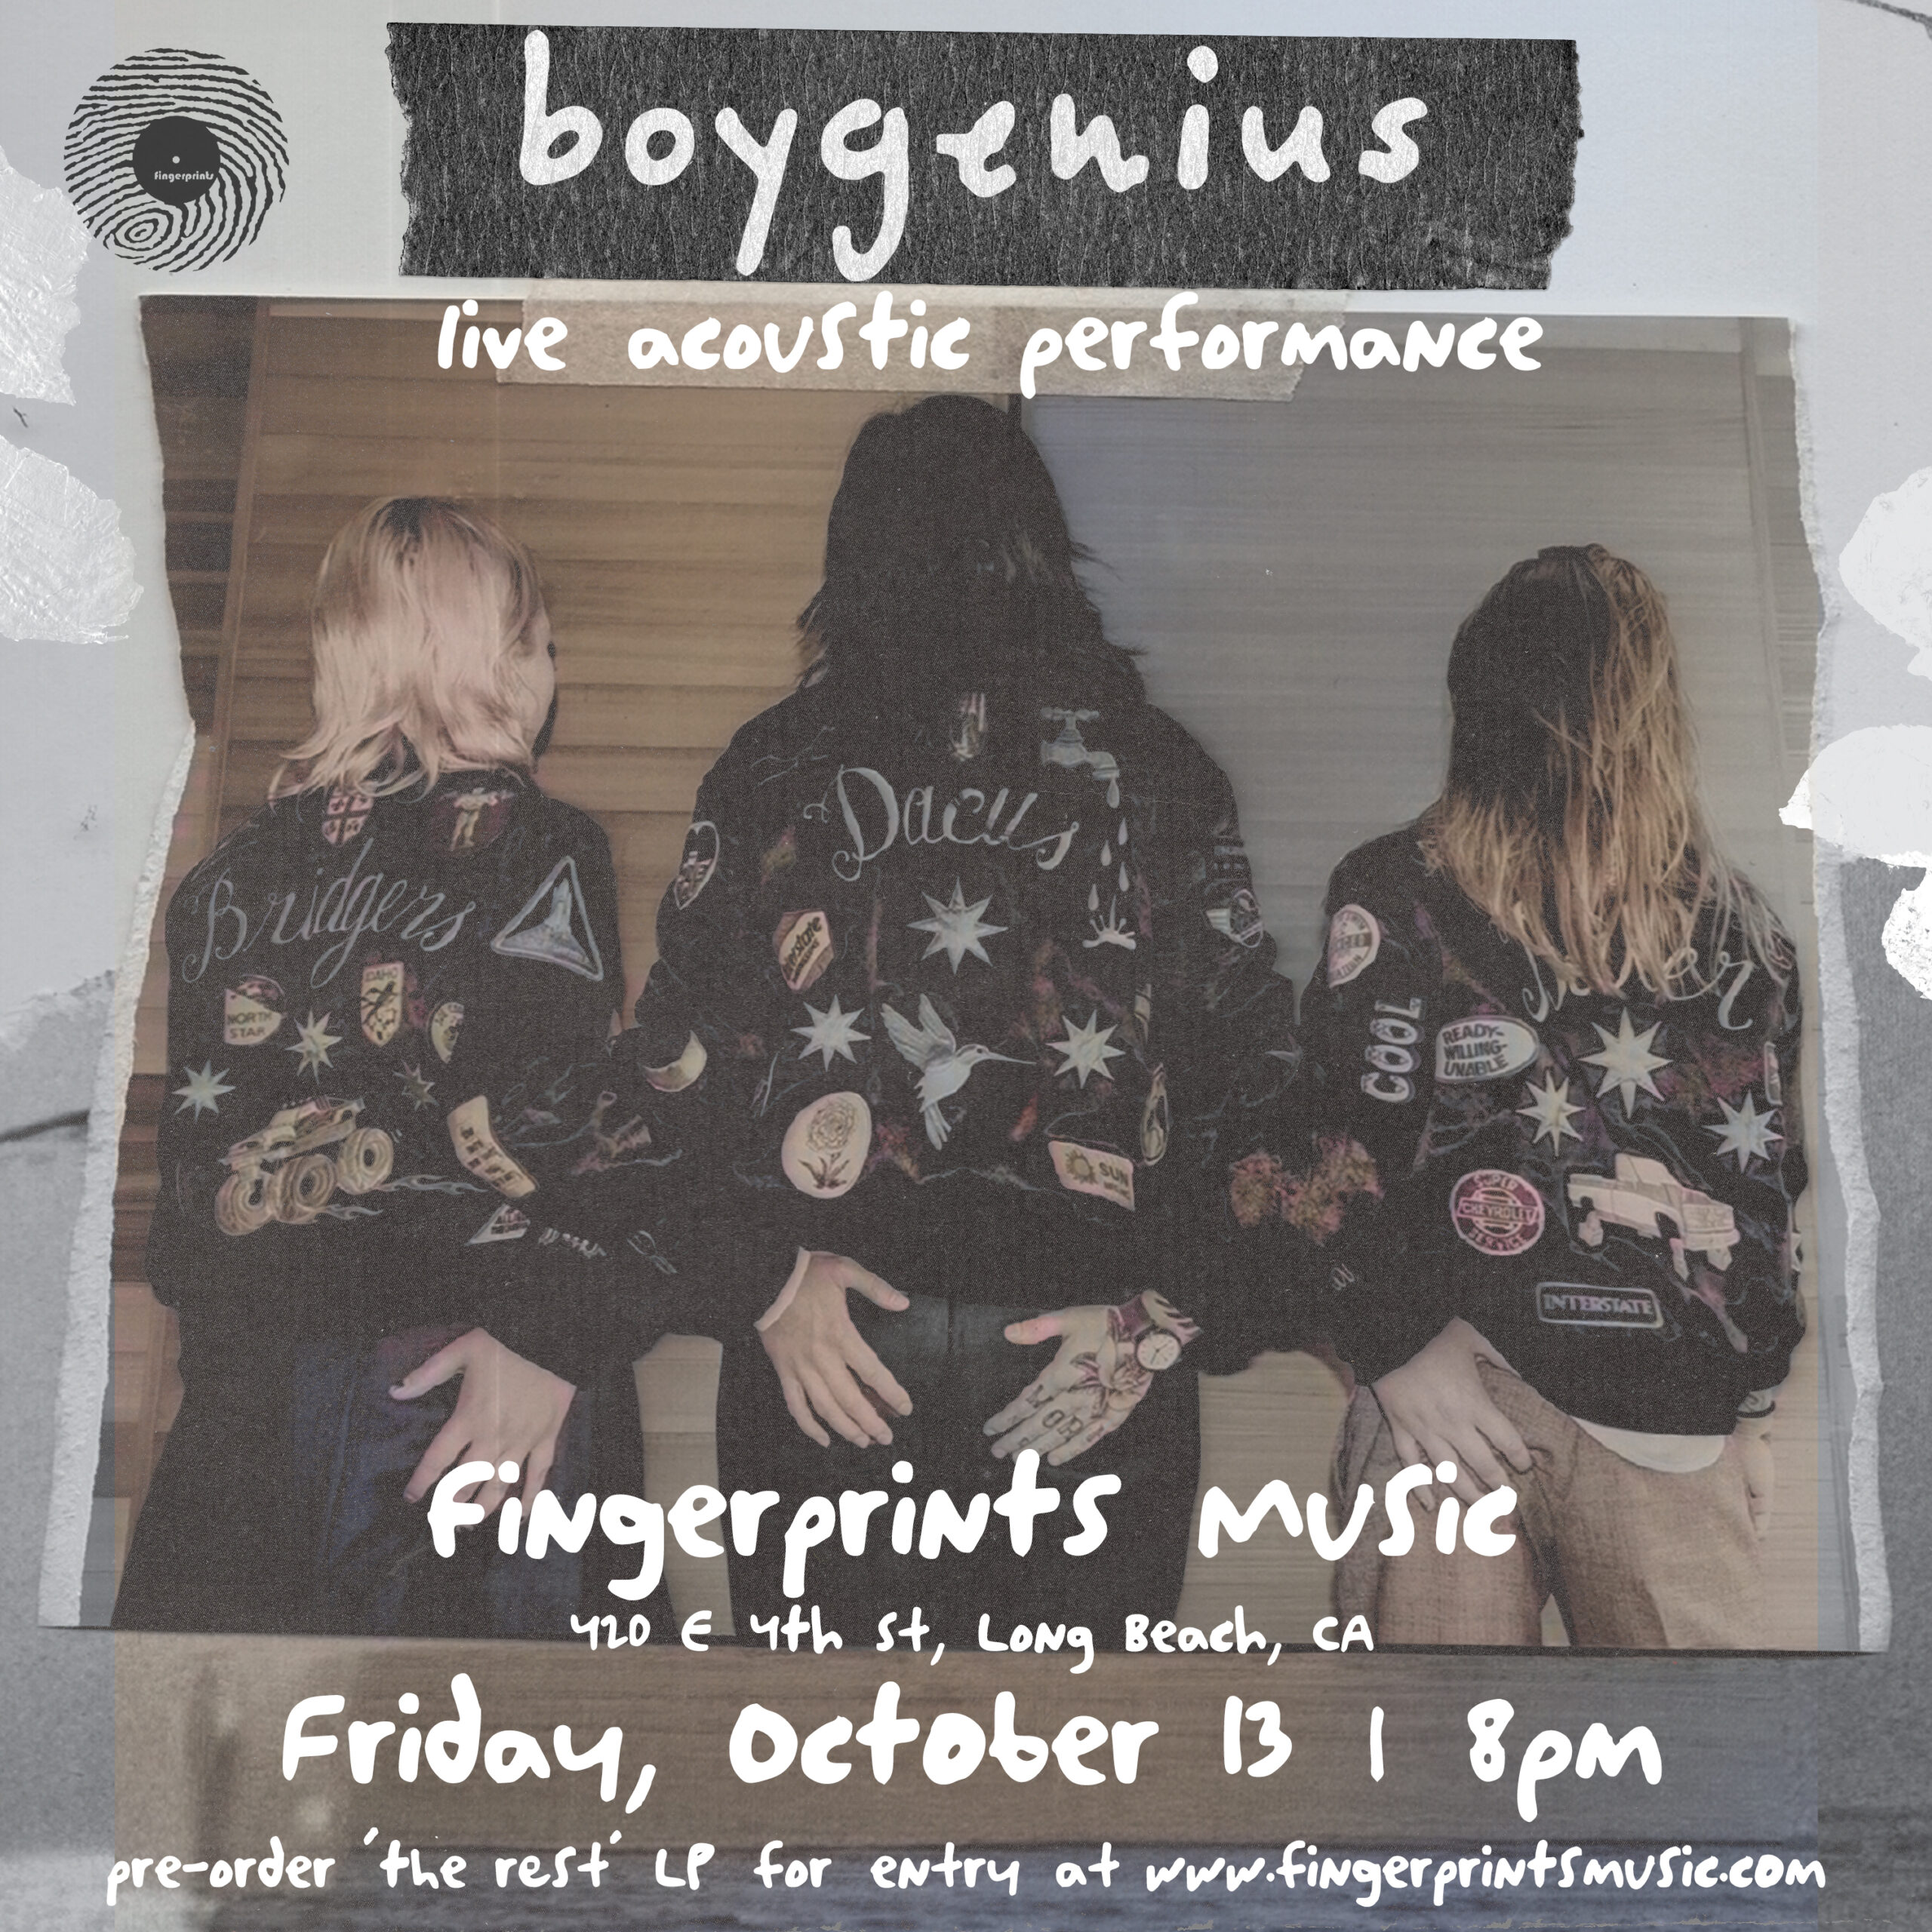 boygenius live acoustic performance at Fingerprints Friday 10/13 at 8pm